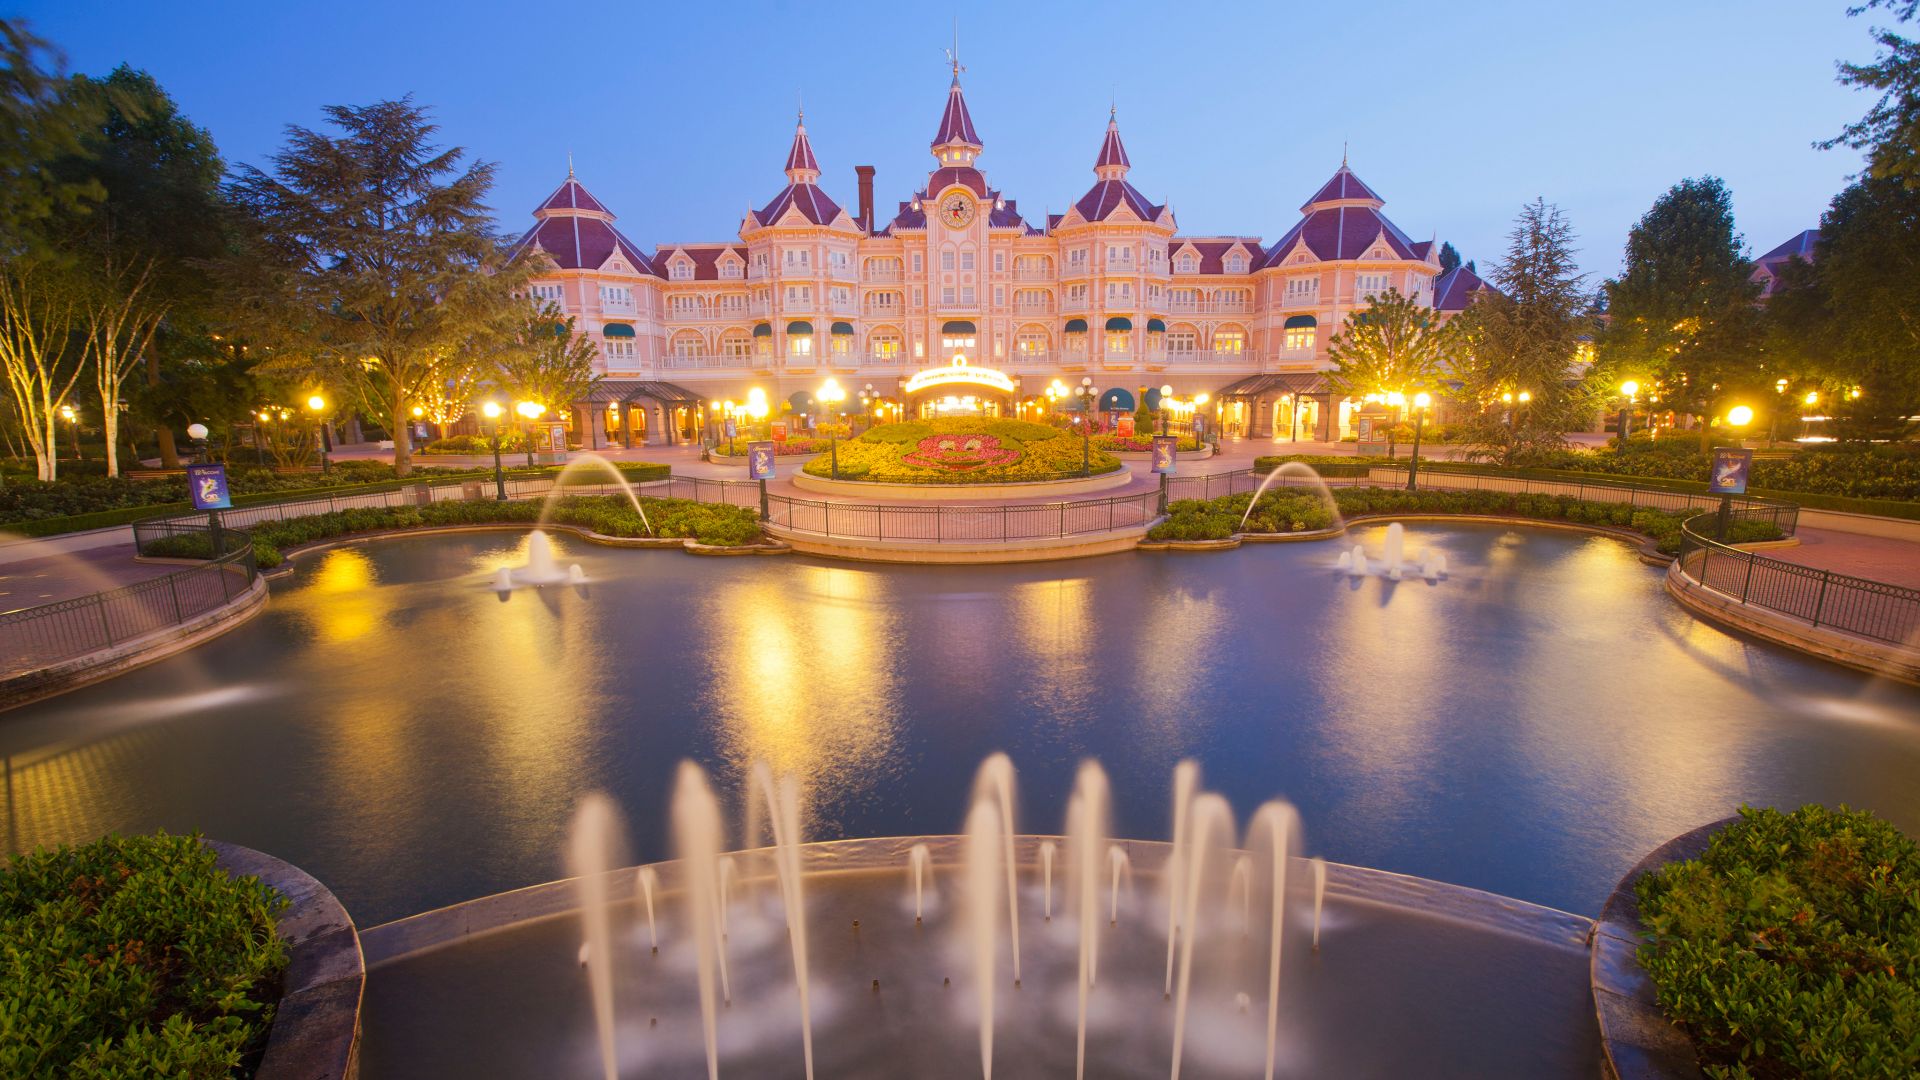 Диснейлэнд, Disneyland Hotel, Paris, France, Europe, fountain, 4k (horizontal)